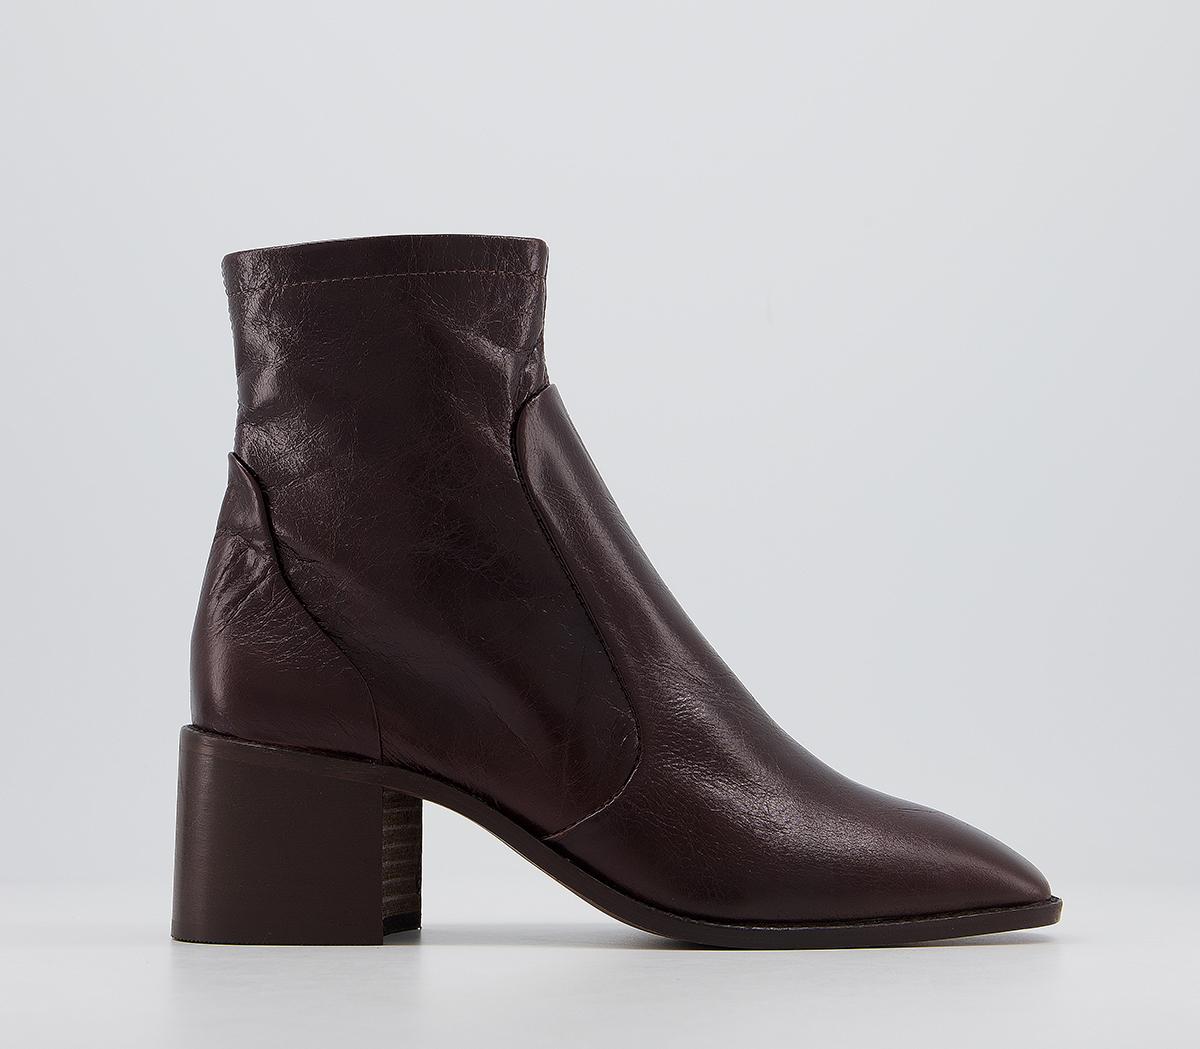 OFFICEAddison Unlined Block Heel BootsChocolate Leather